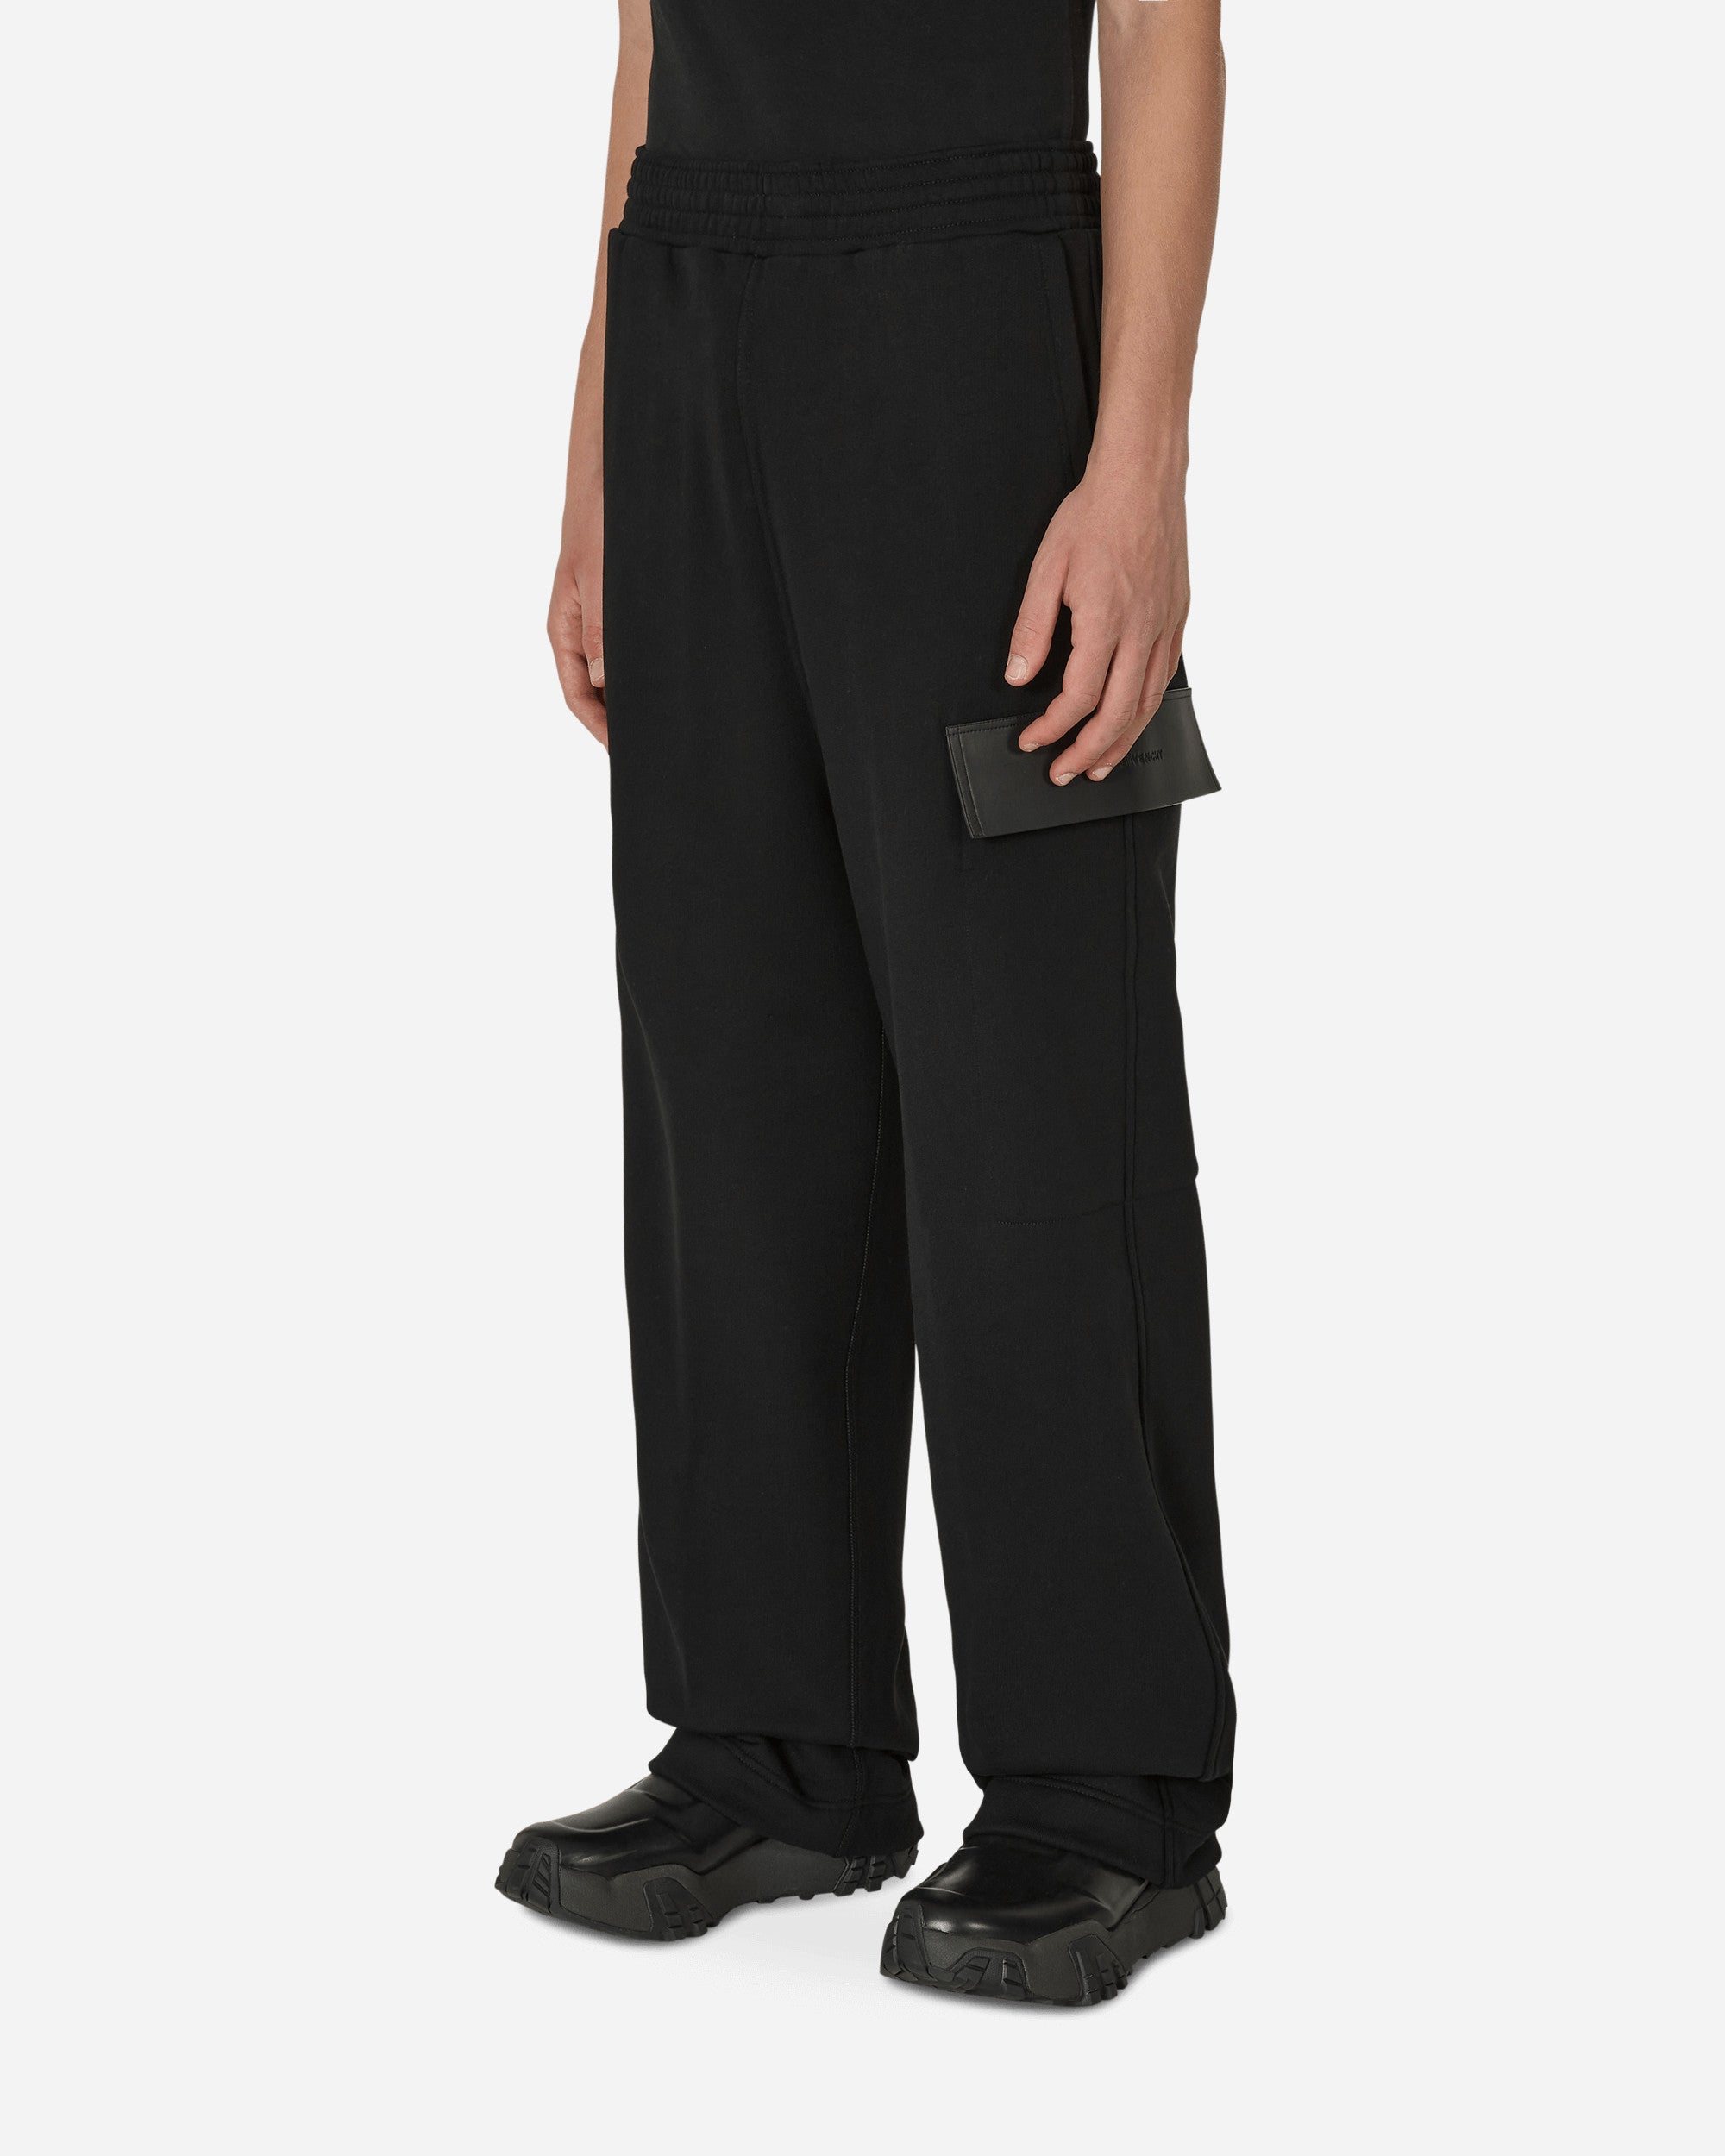 Givenchy Trousers Black Pants Trousers BM51593Y8C 001